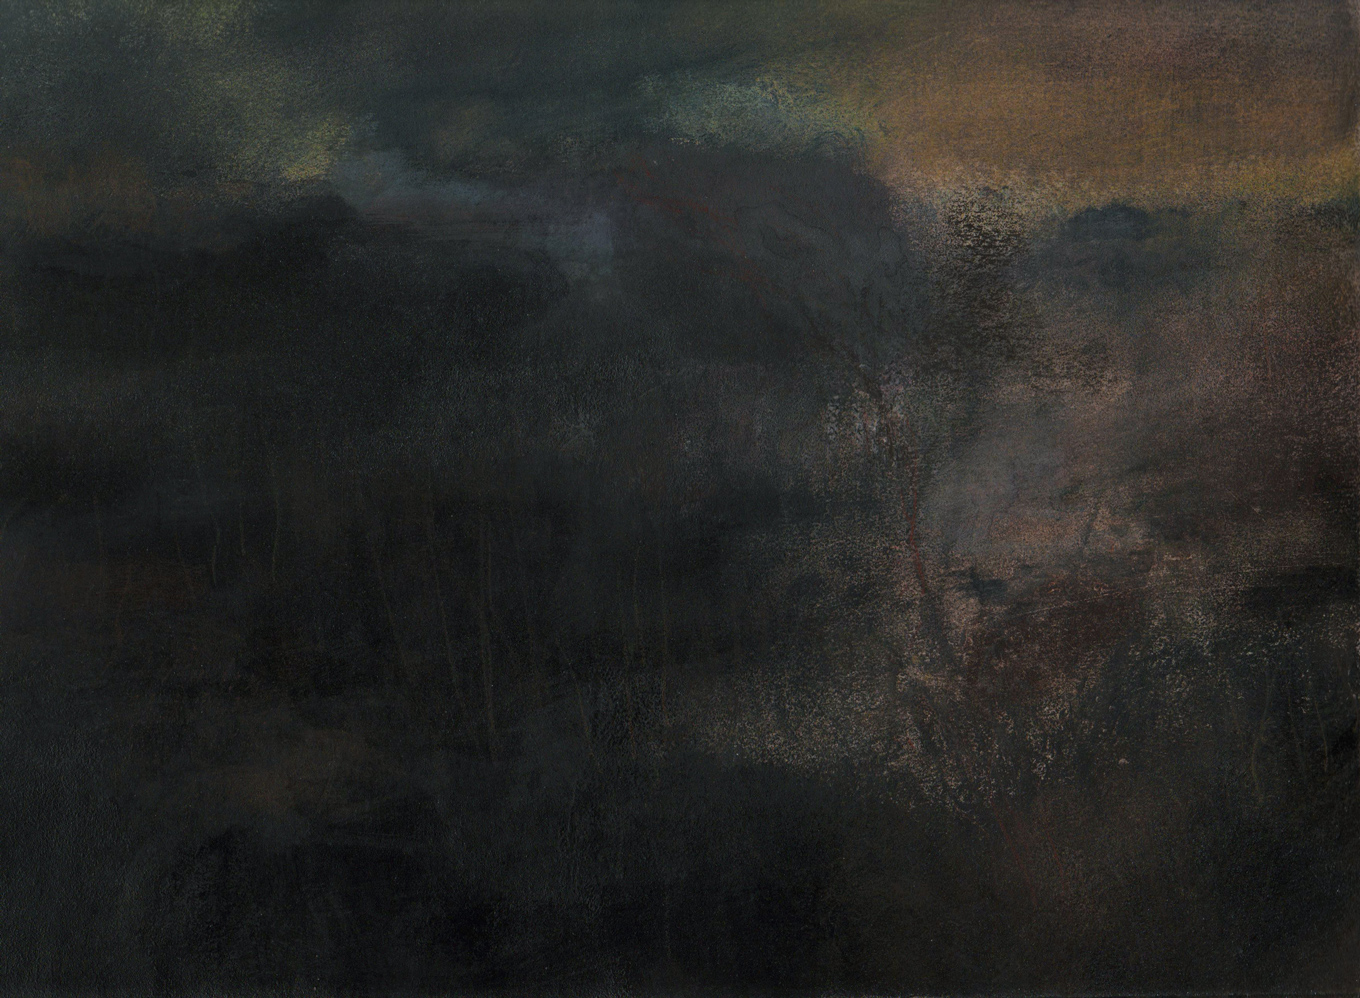 L1257 - Nicholas Herbert, British Artist, mixed media landscape painting of Chobham Common, mixed media on paper, 2020